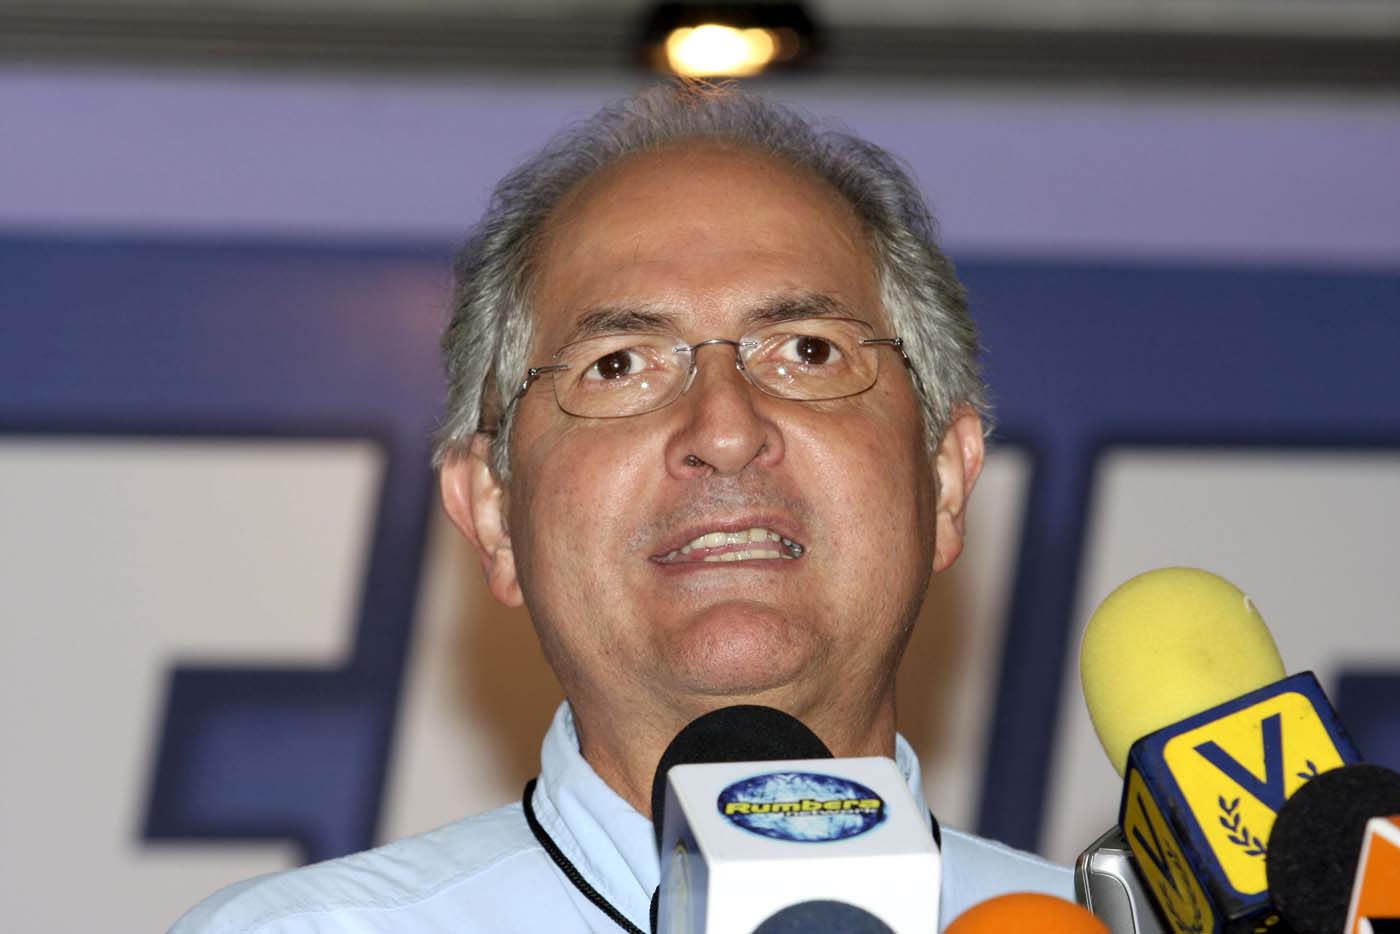 Medida sustitutiva de libertad para Alcalde Ledezma por problemas de salud